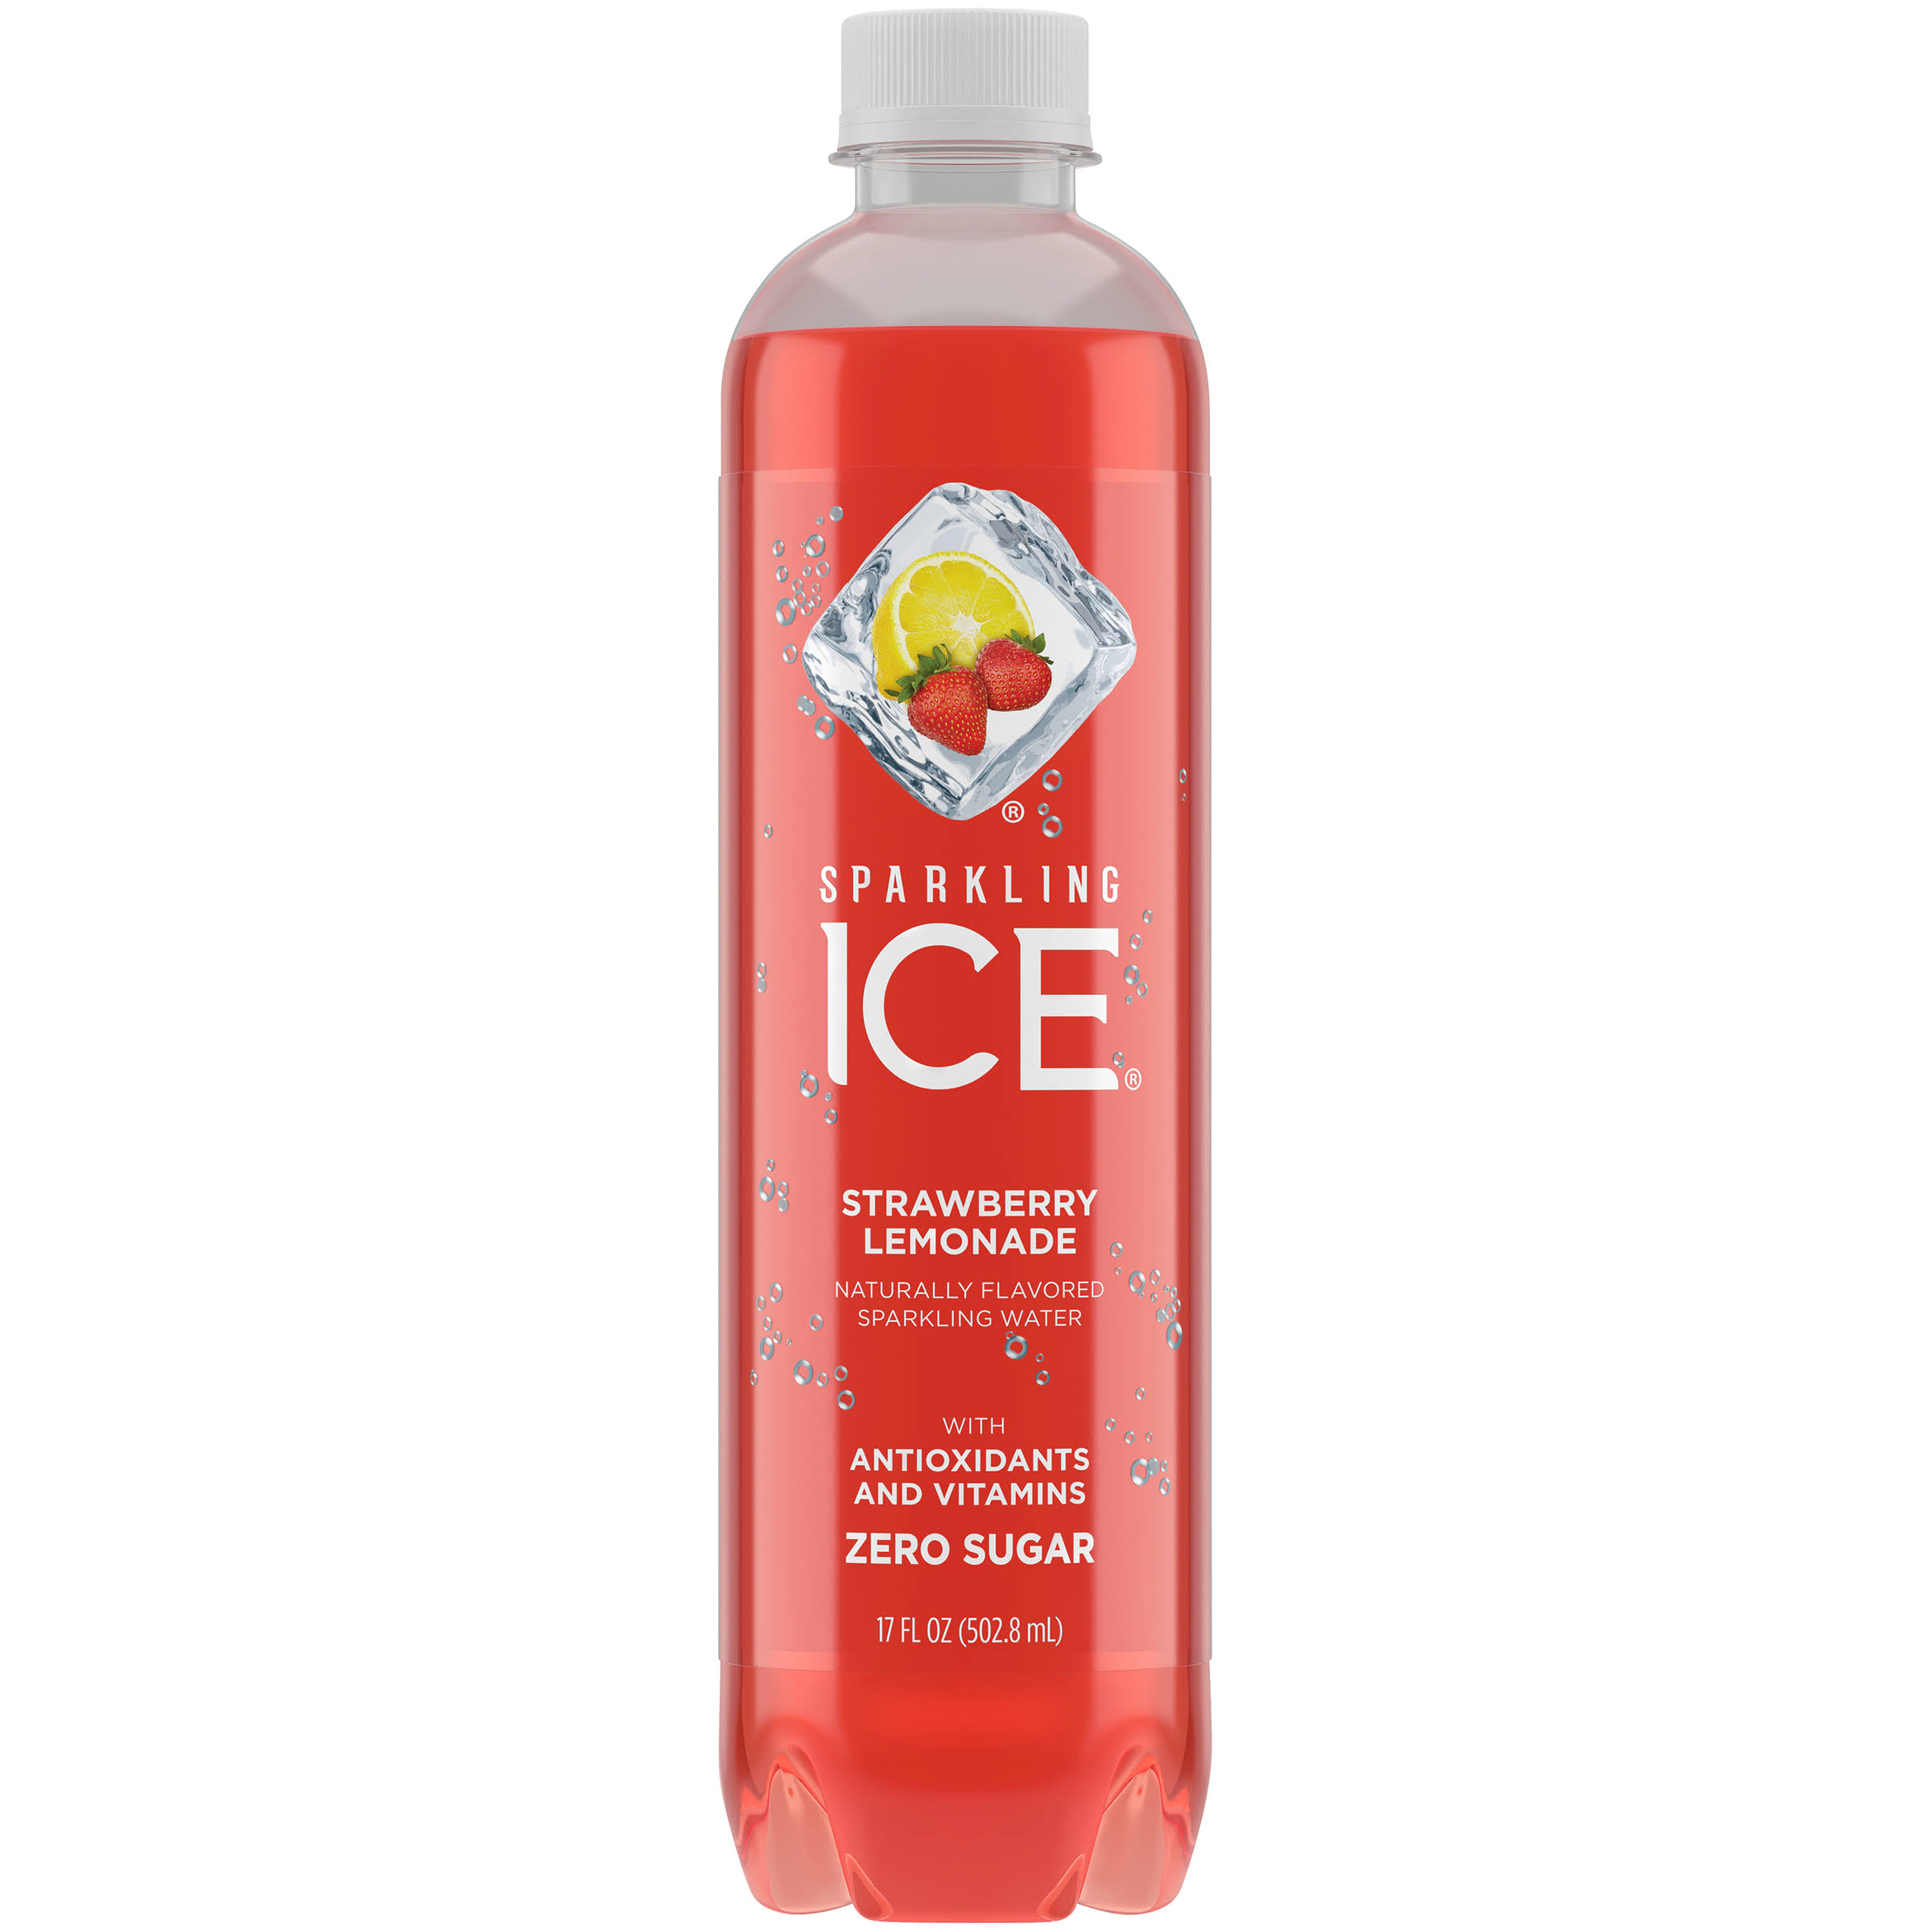 Sparkling Ice Lemonade - Strawberry Lemonade